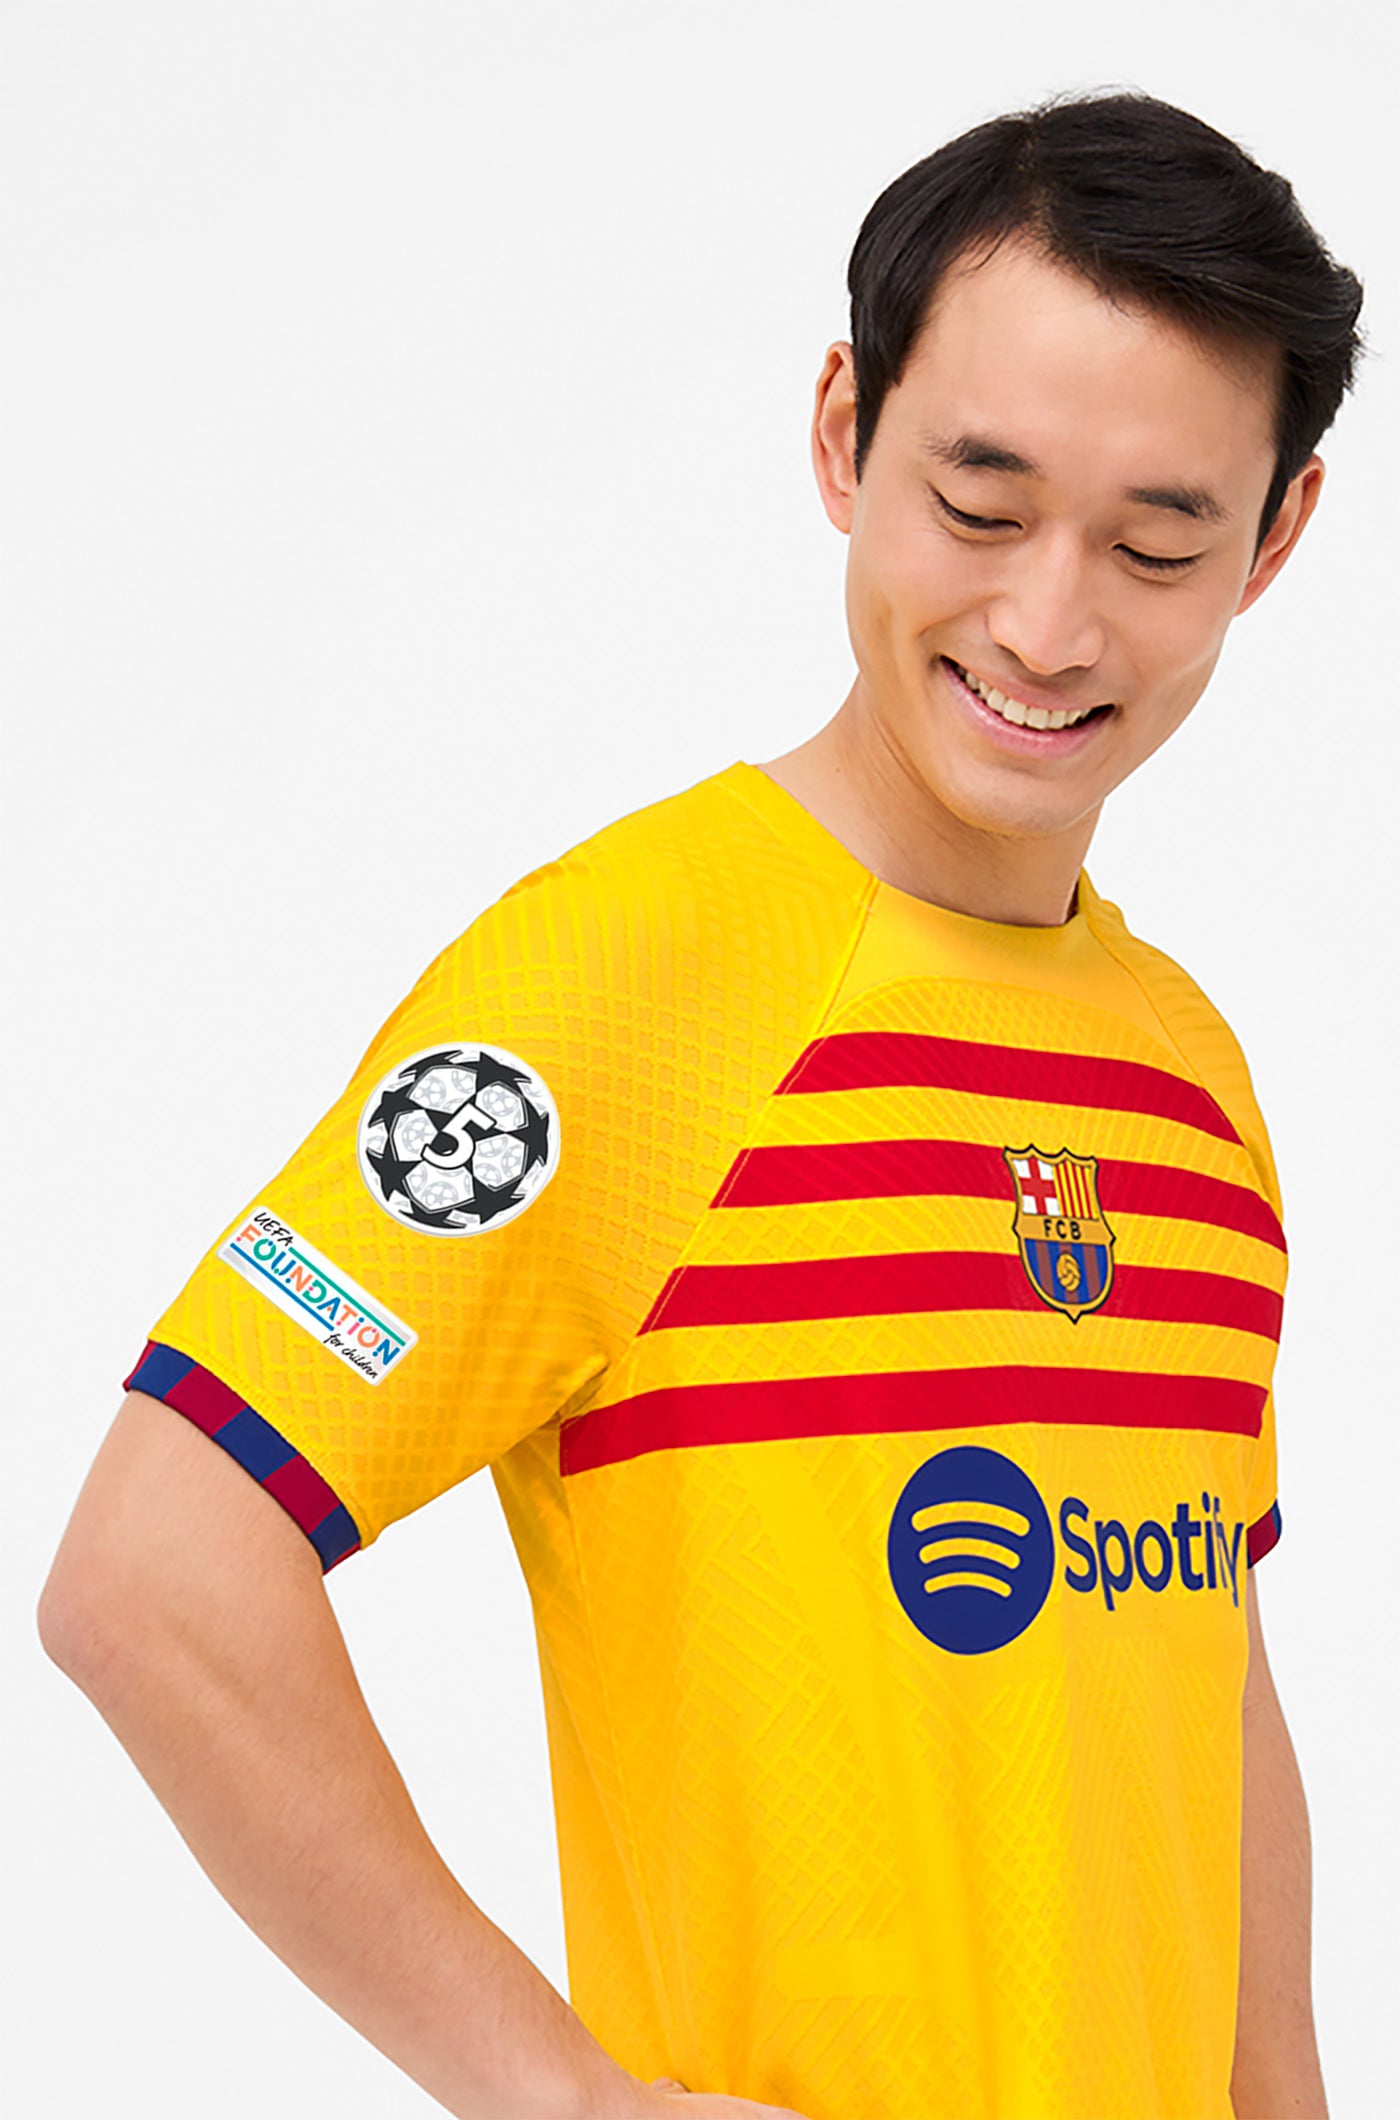 UCL FC Barcelona fourth shirt 23/24 Player’s Edition - F. DE JONG